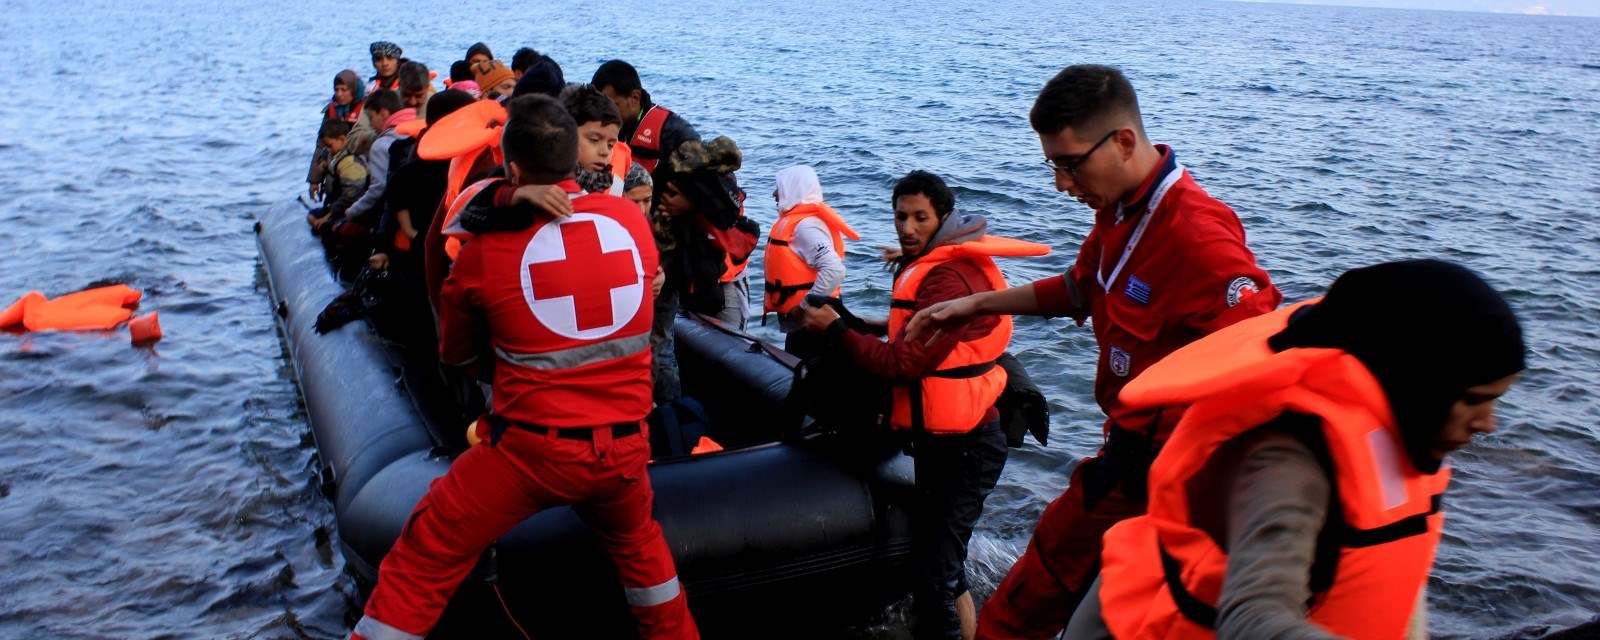 Båtflyktninger hentes ut av båt